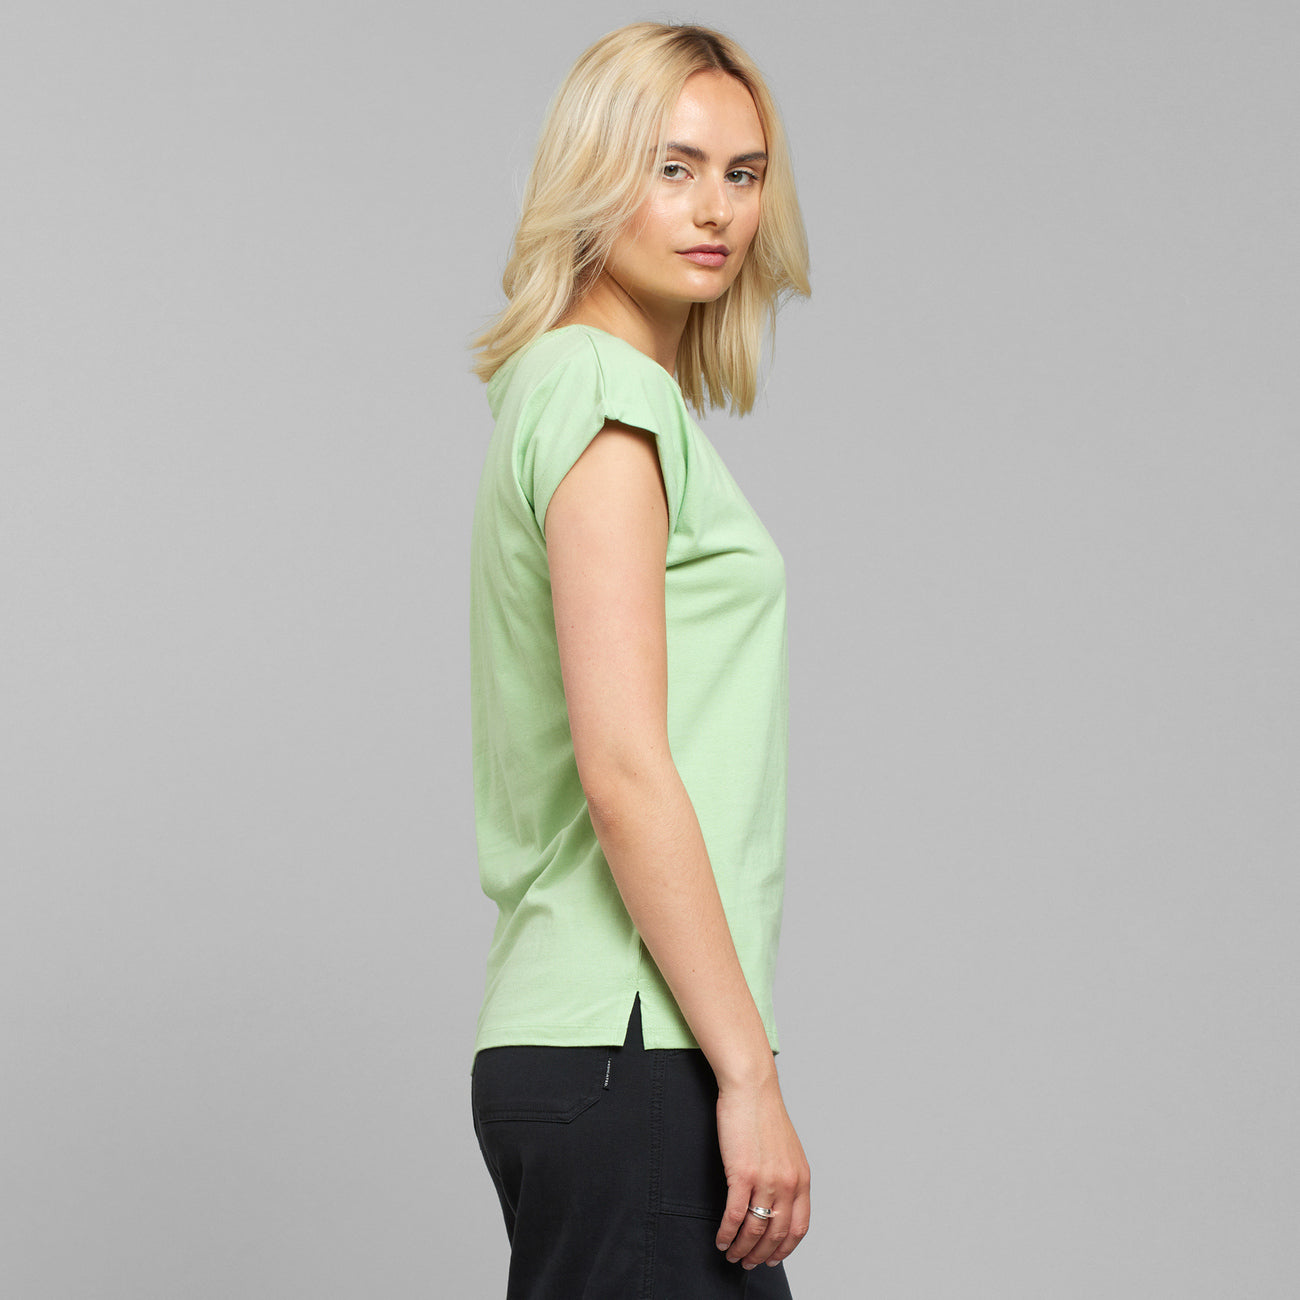 T-Shirt Visby Base Quiet Green - LEEF mode en accessoires